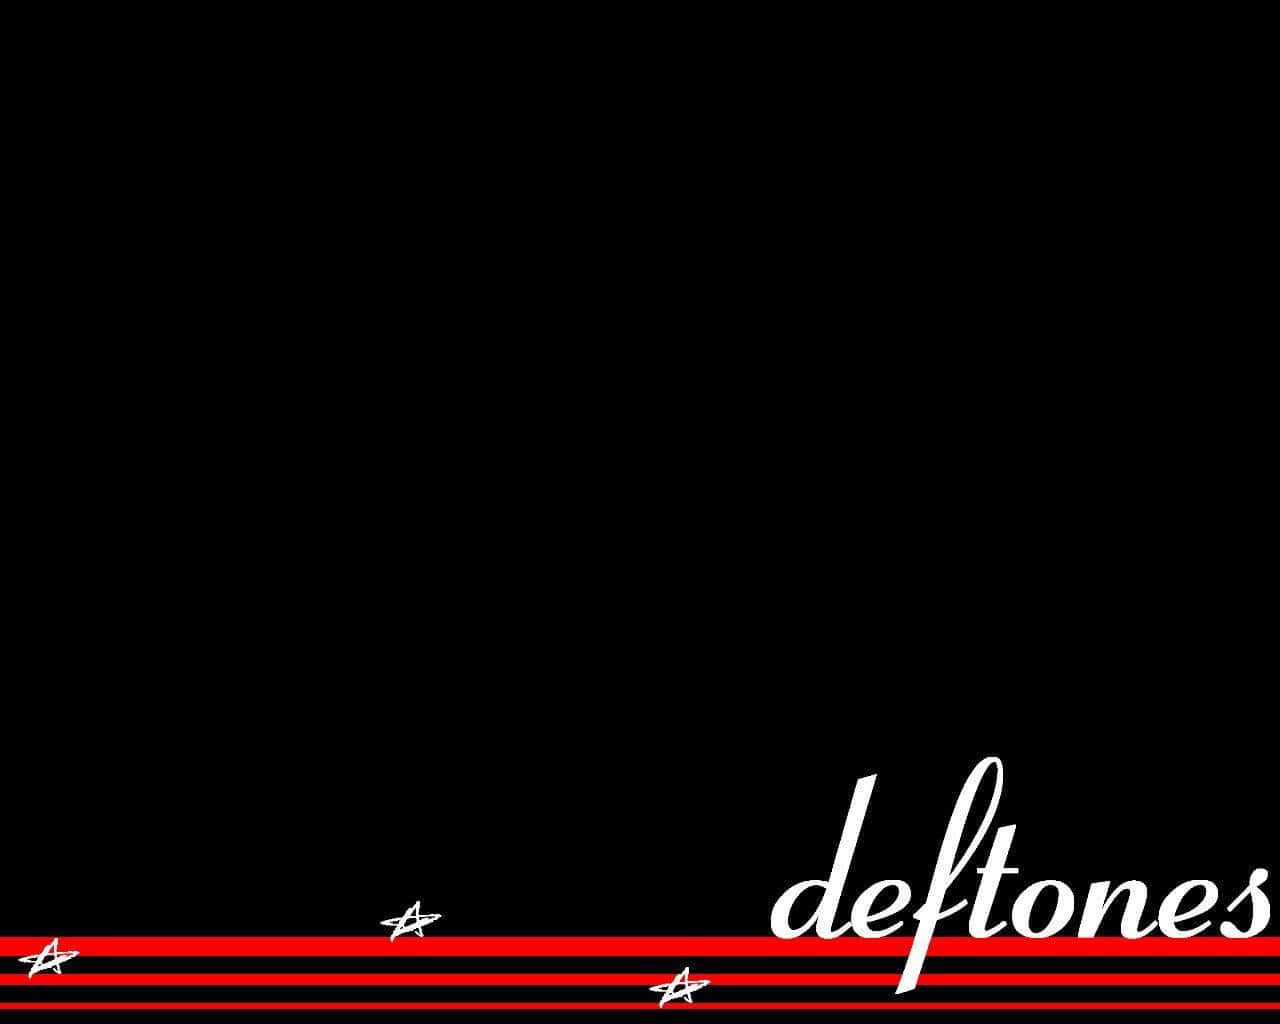 The Deftones’ Dynamic Live Show Wallpaper